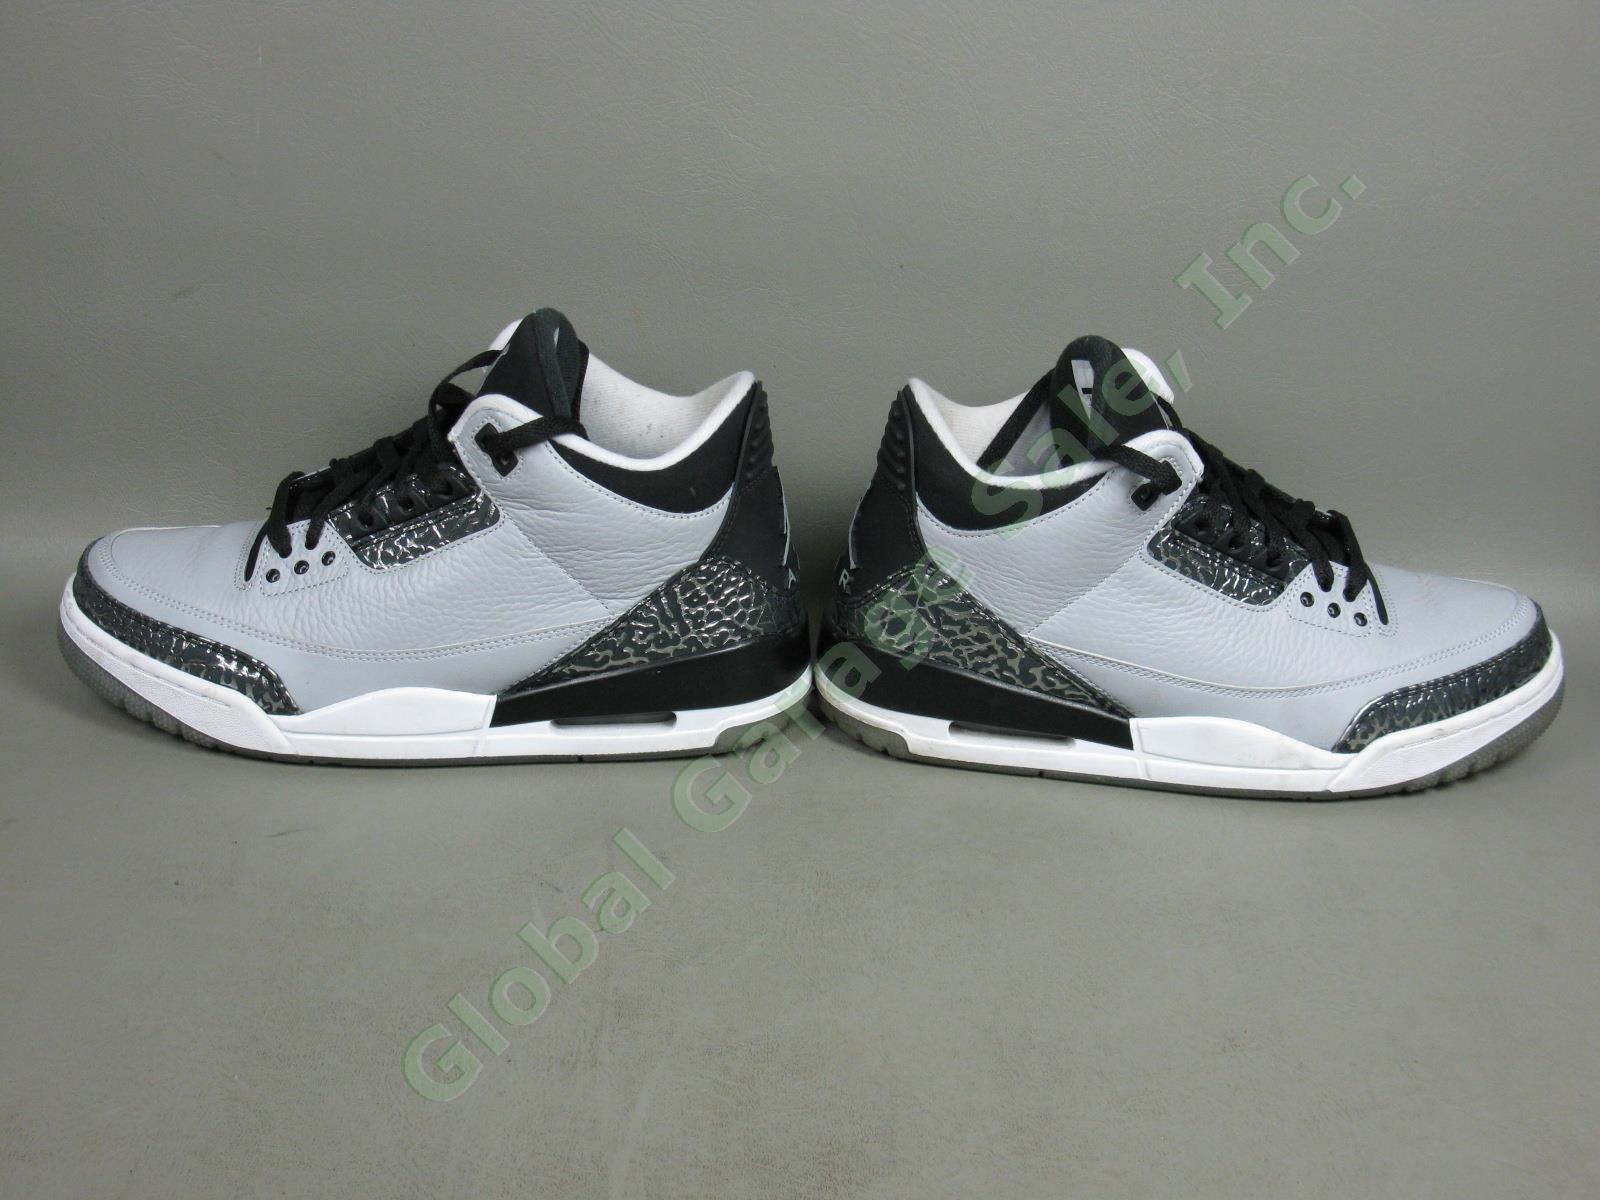 Nike Air Jordan 3 Retro Wolf Grey Basketball Shoes Size US 9 EUR 42.5 136064-004 4